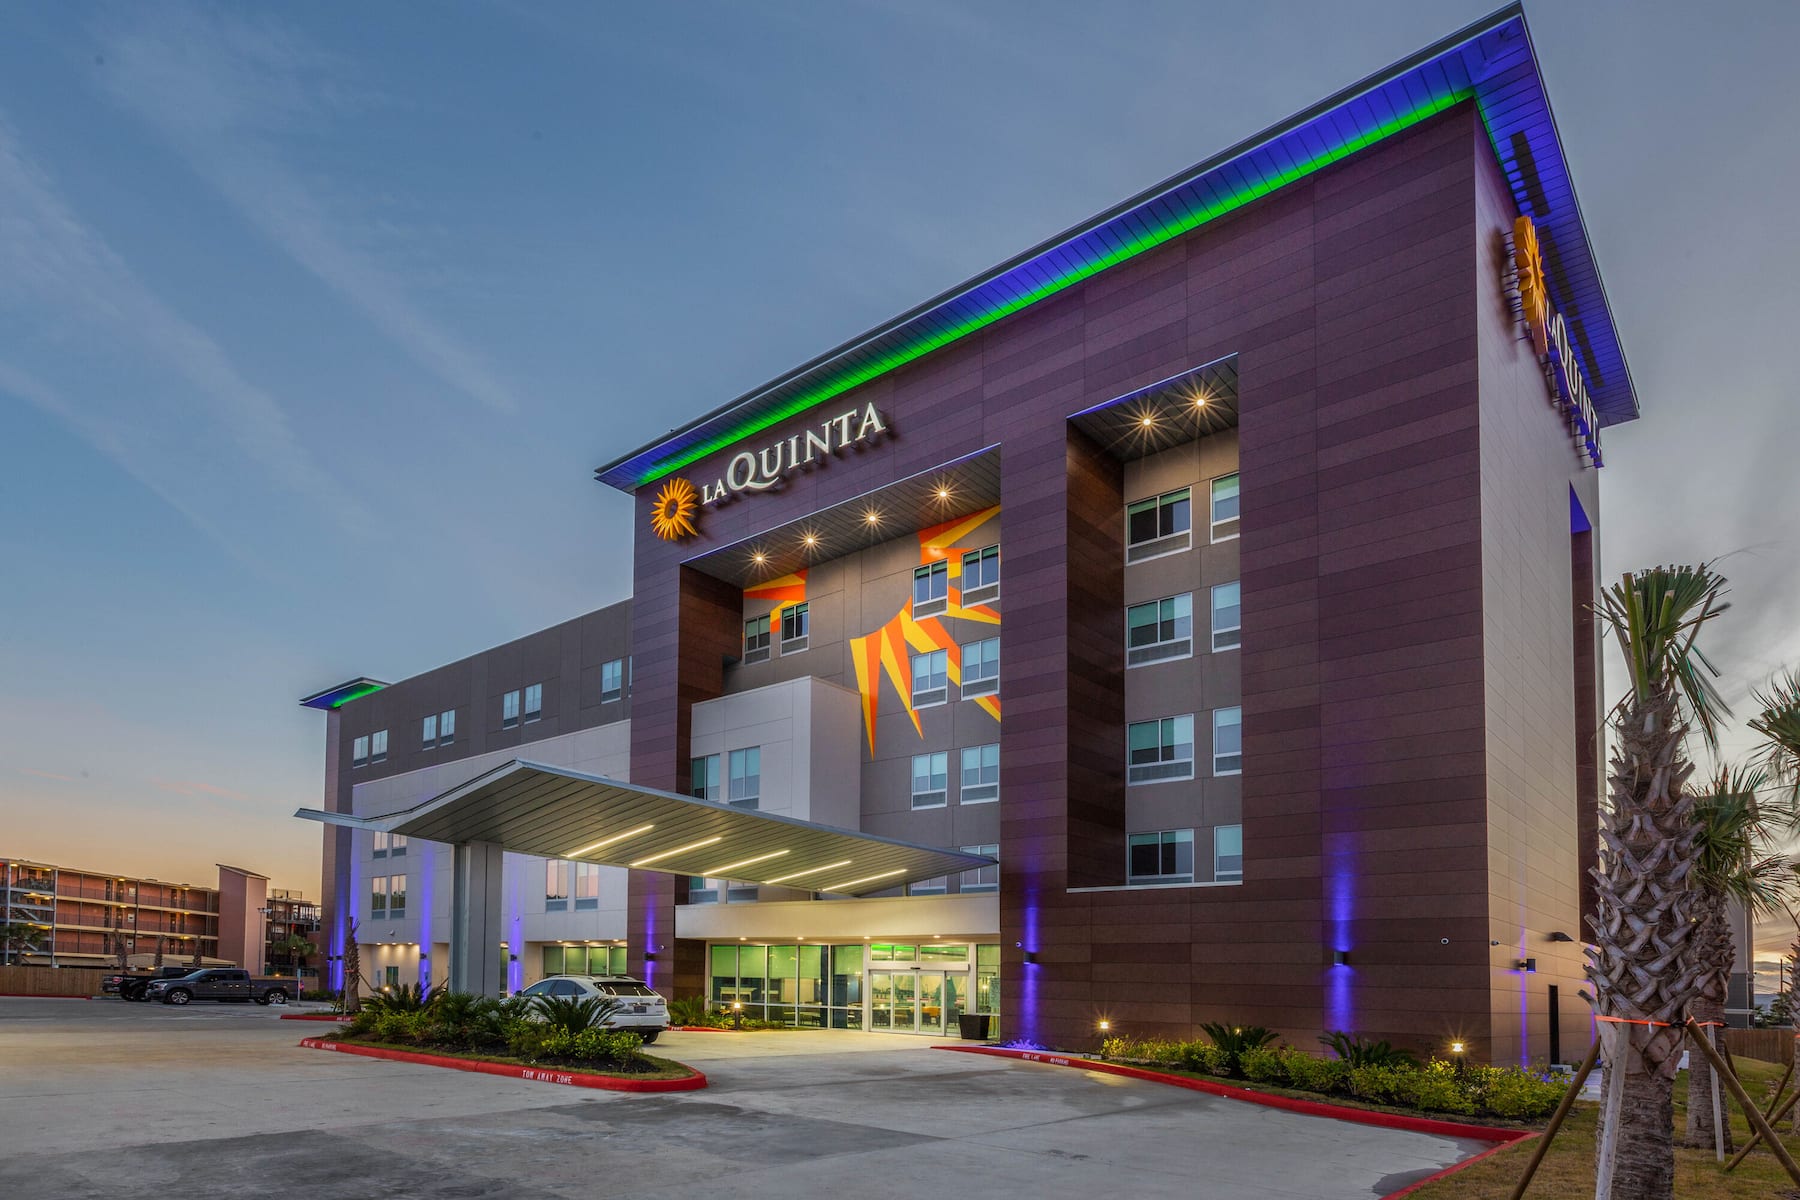 Exterior Dusk Image of La Quinta Inn & Suites by Wyndham Galveston West Seawall hotel in Galveston, Texas